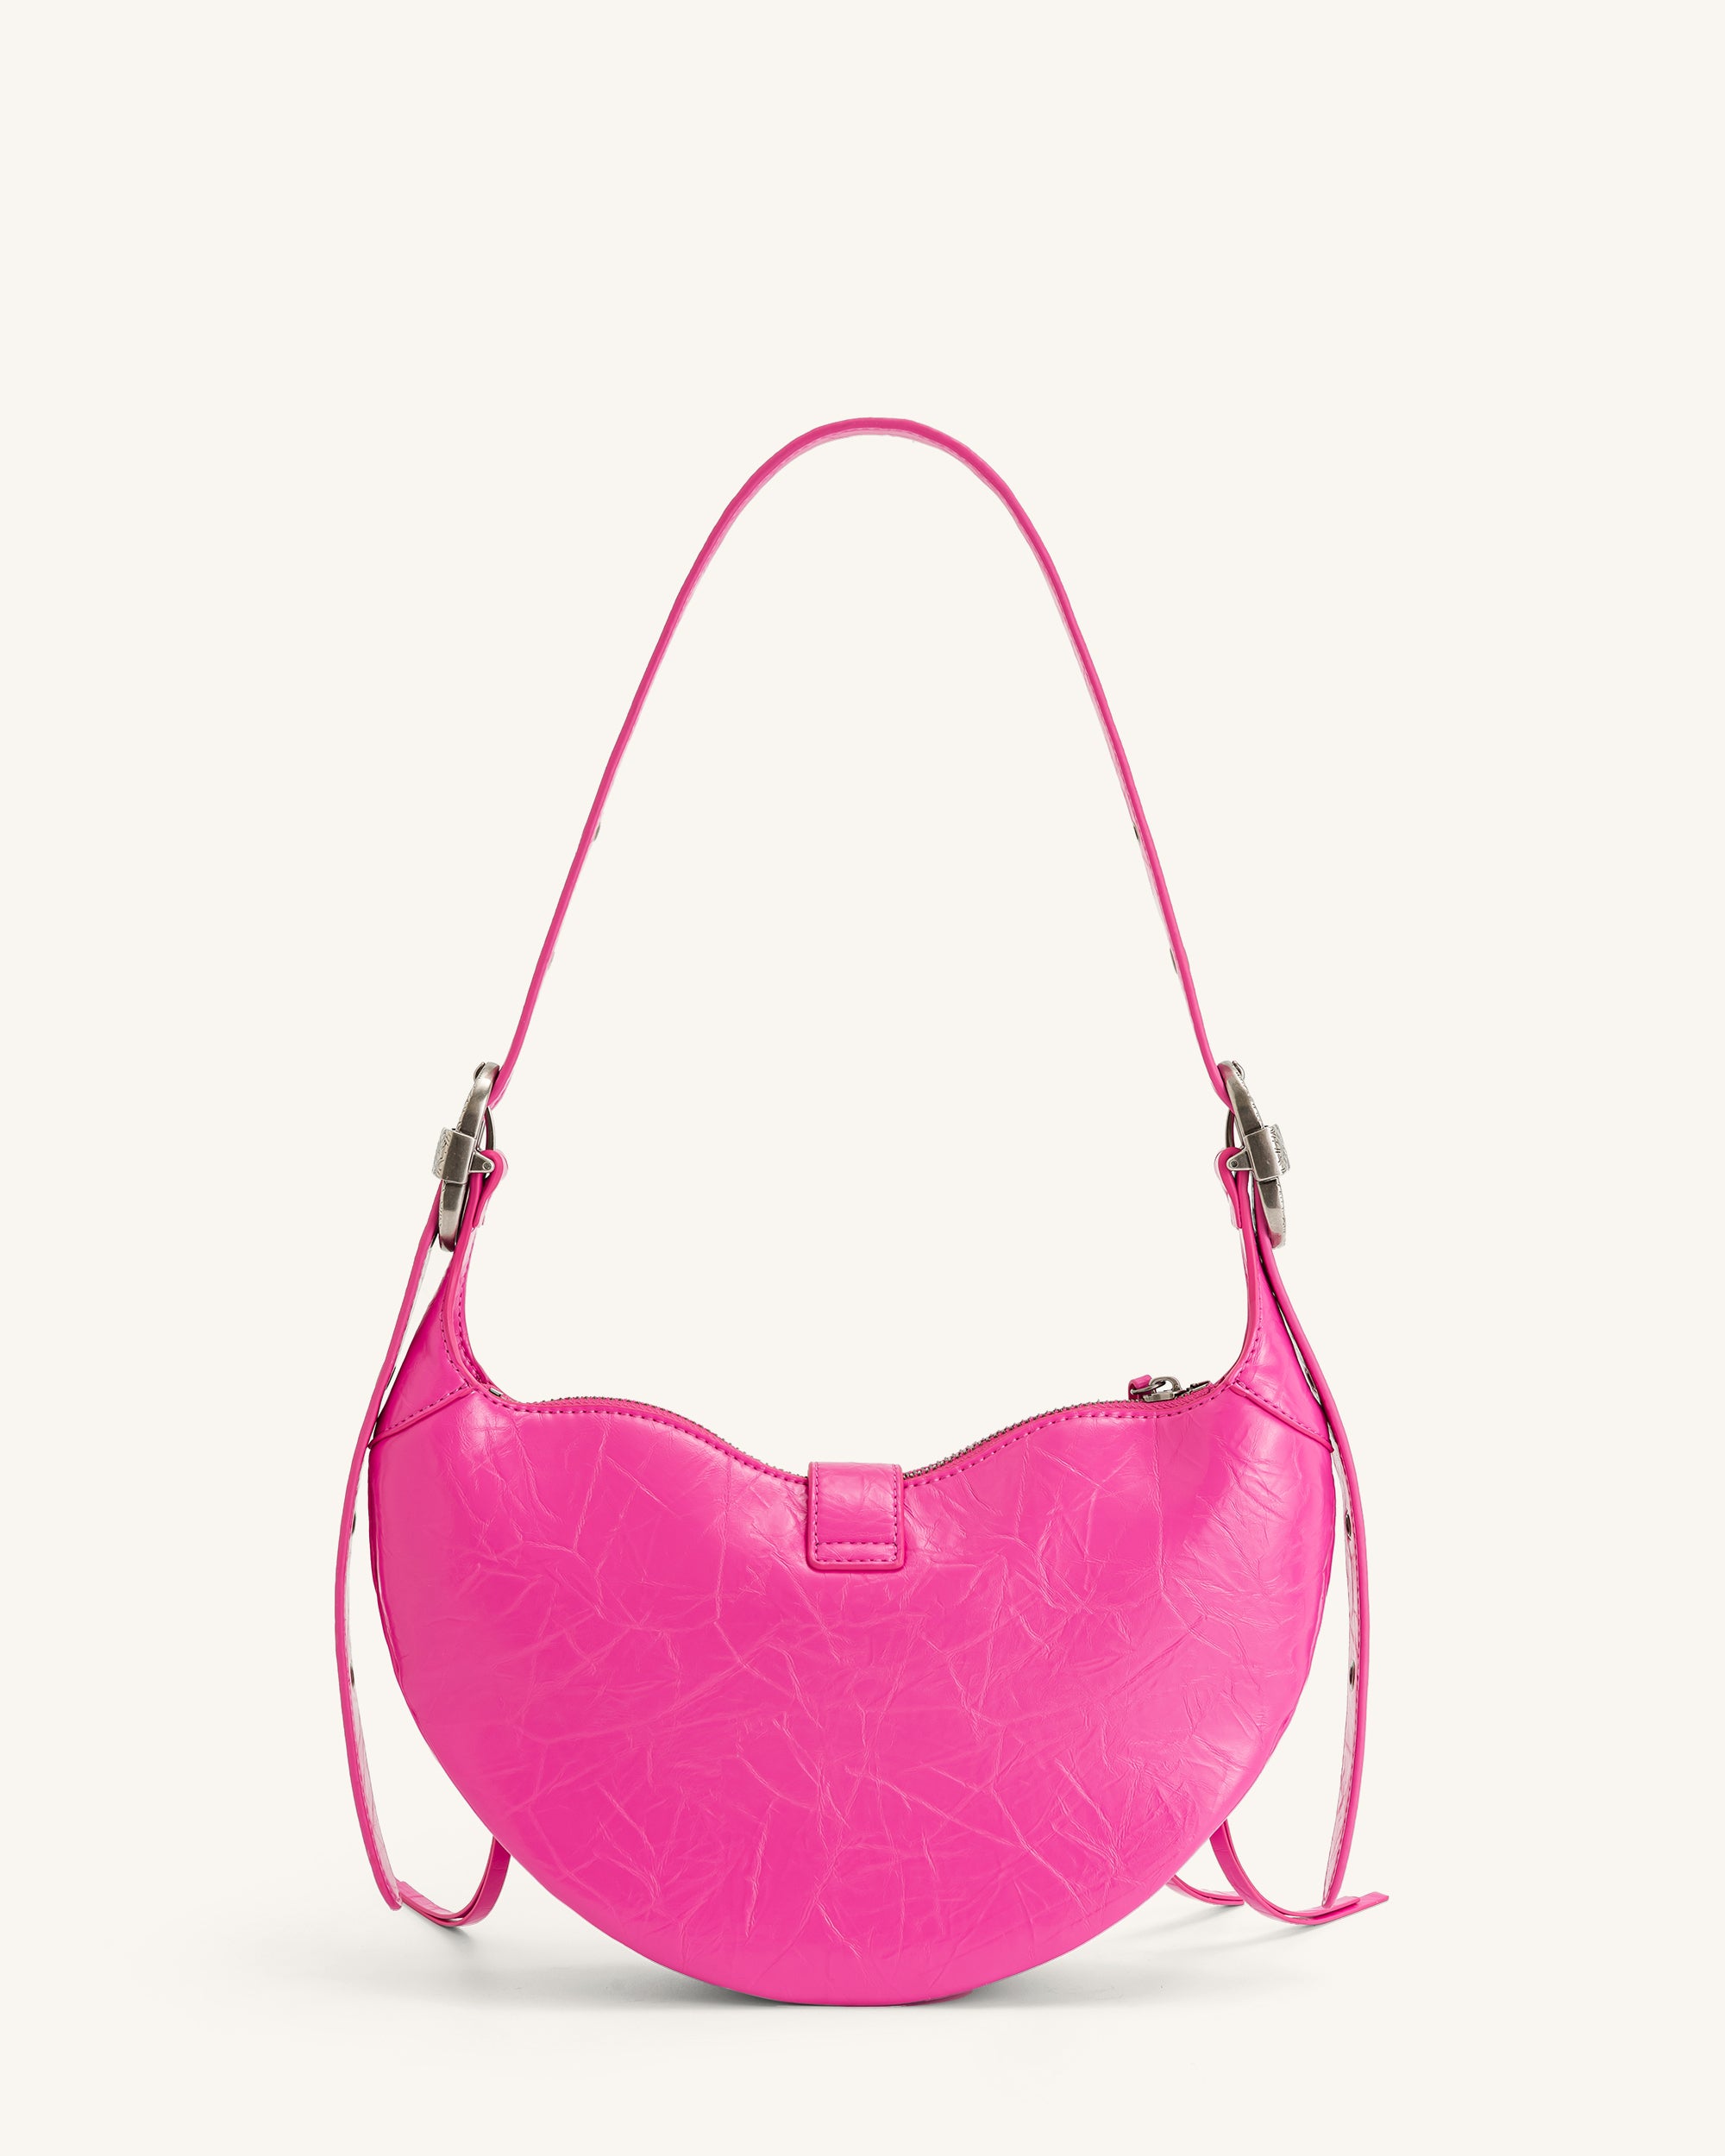 Joy Crushed Shoulder Bag - Bright Pink Online Shopping - JW Pei